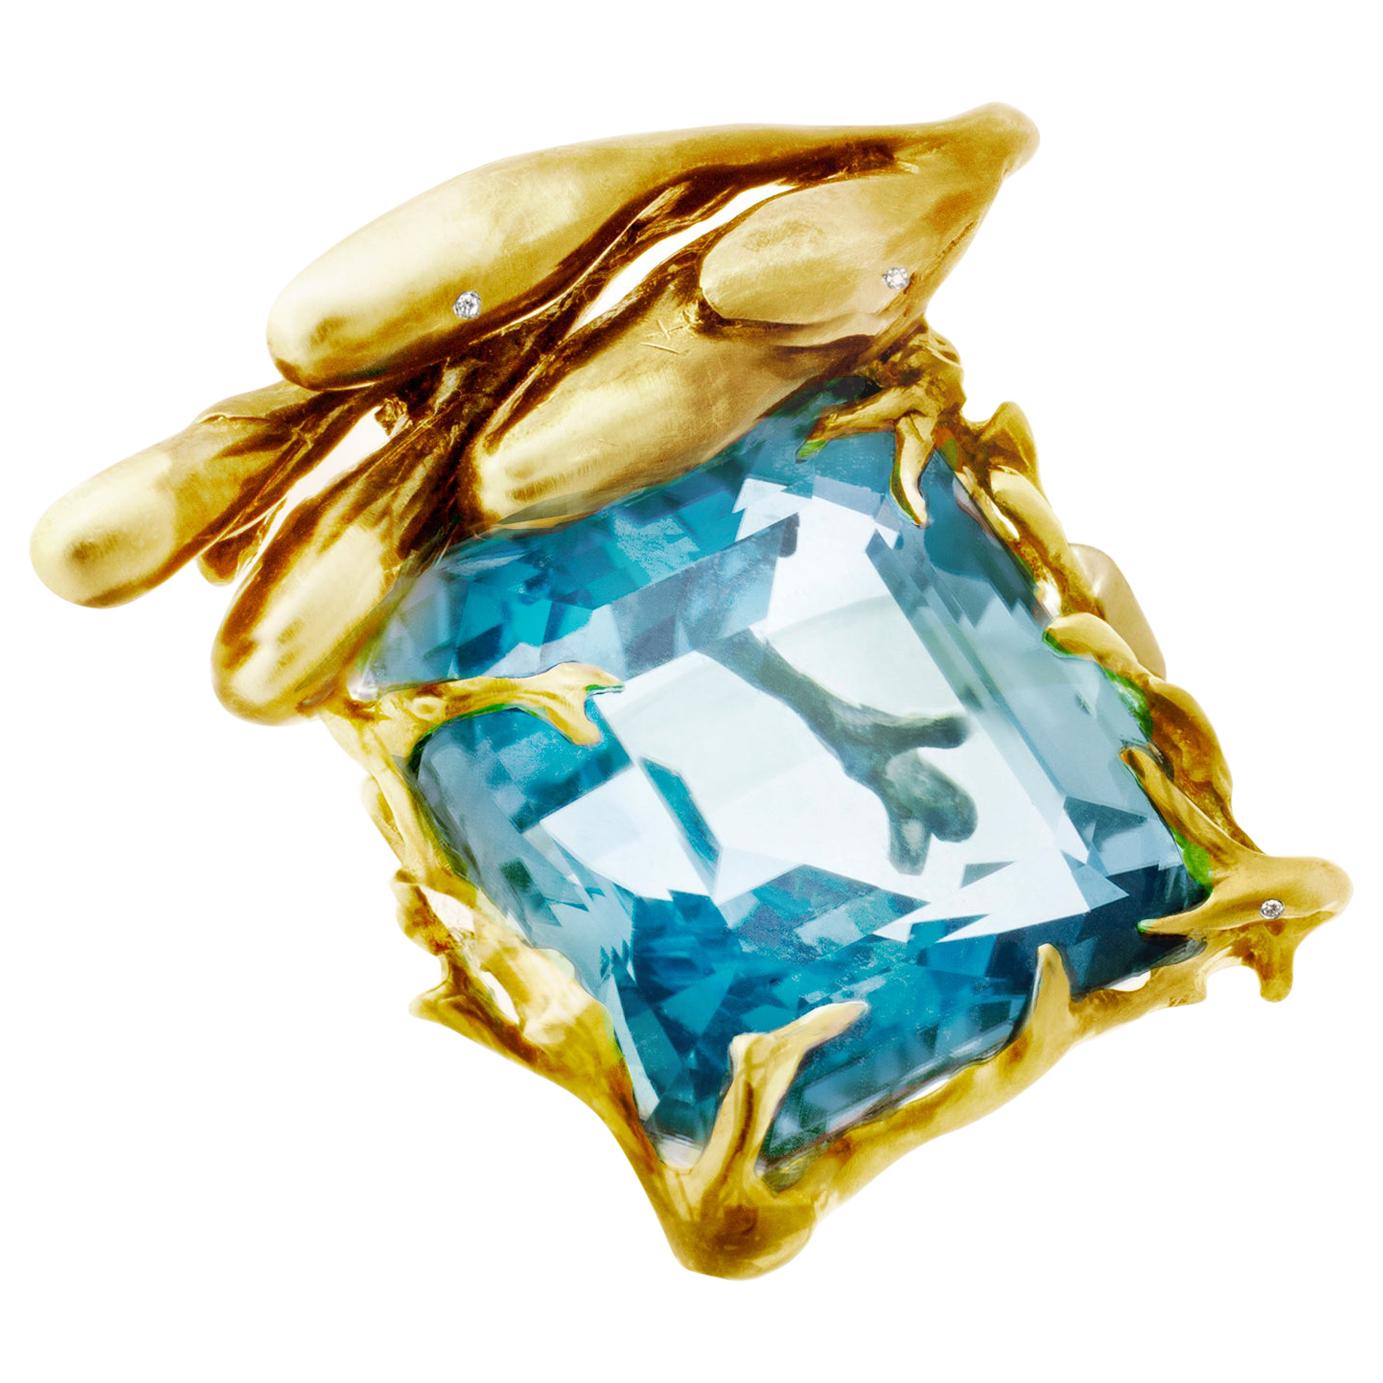  Eighteen Karat Yellow Gold Engagement Ring with Aquamarine